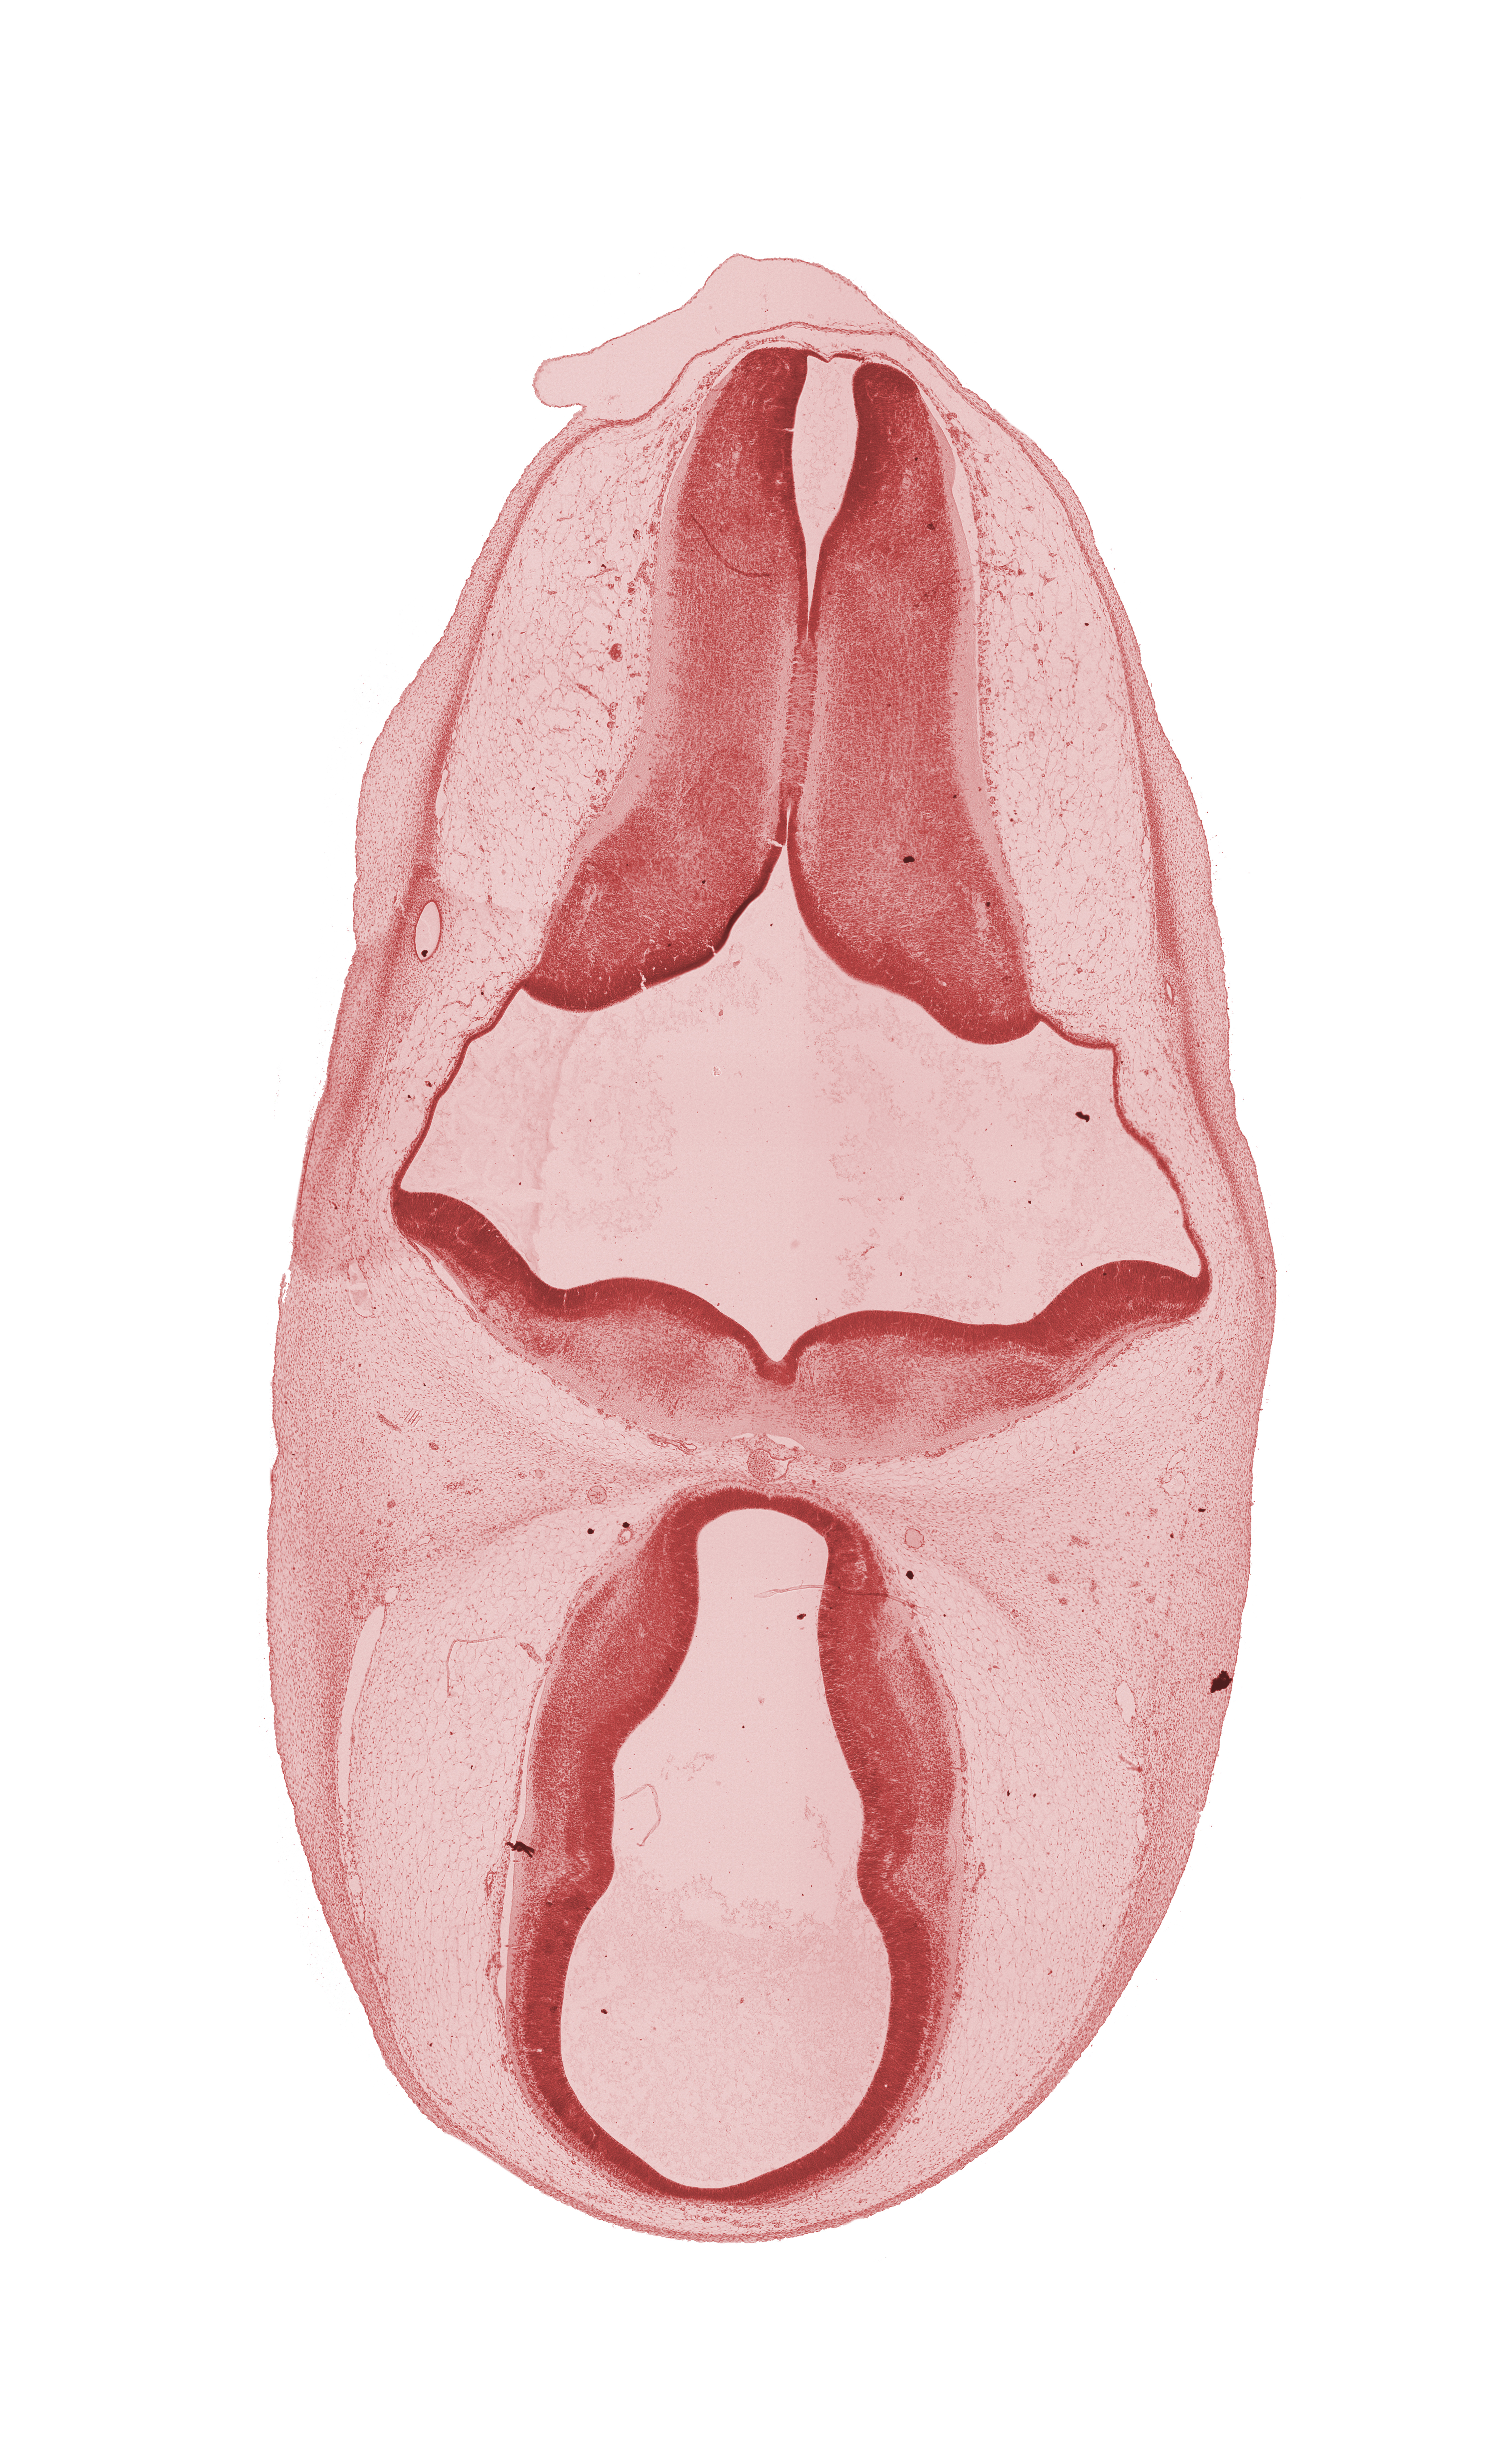 dorsal sulcus, dorsal thalamus, endolymphatic duct, epithalamus, hypothalamus, marginal ridge, osteogenic layer, rhombencoel (fourth ventricle), subarachnoid space, third ventricle, ventral thalamus